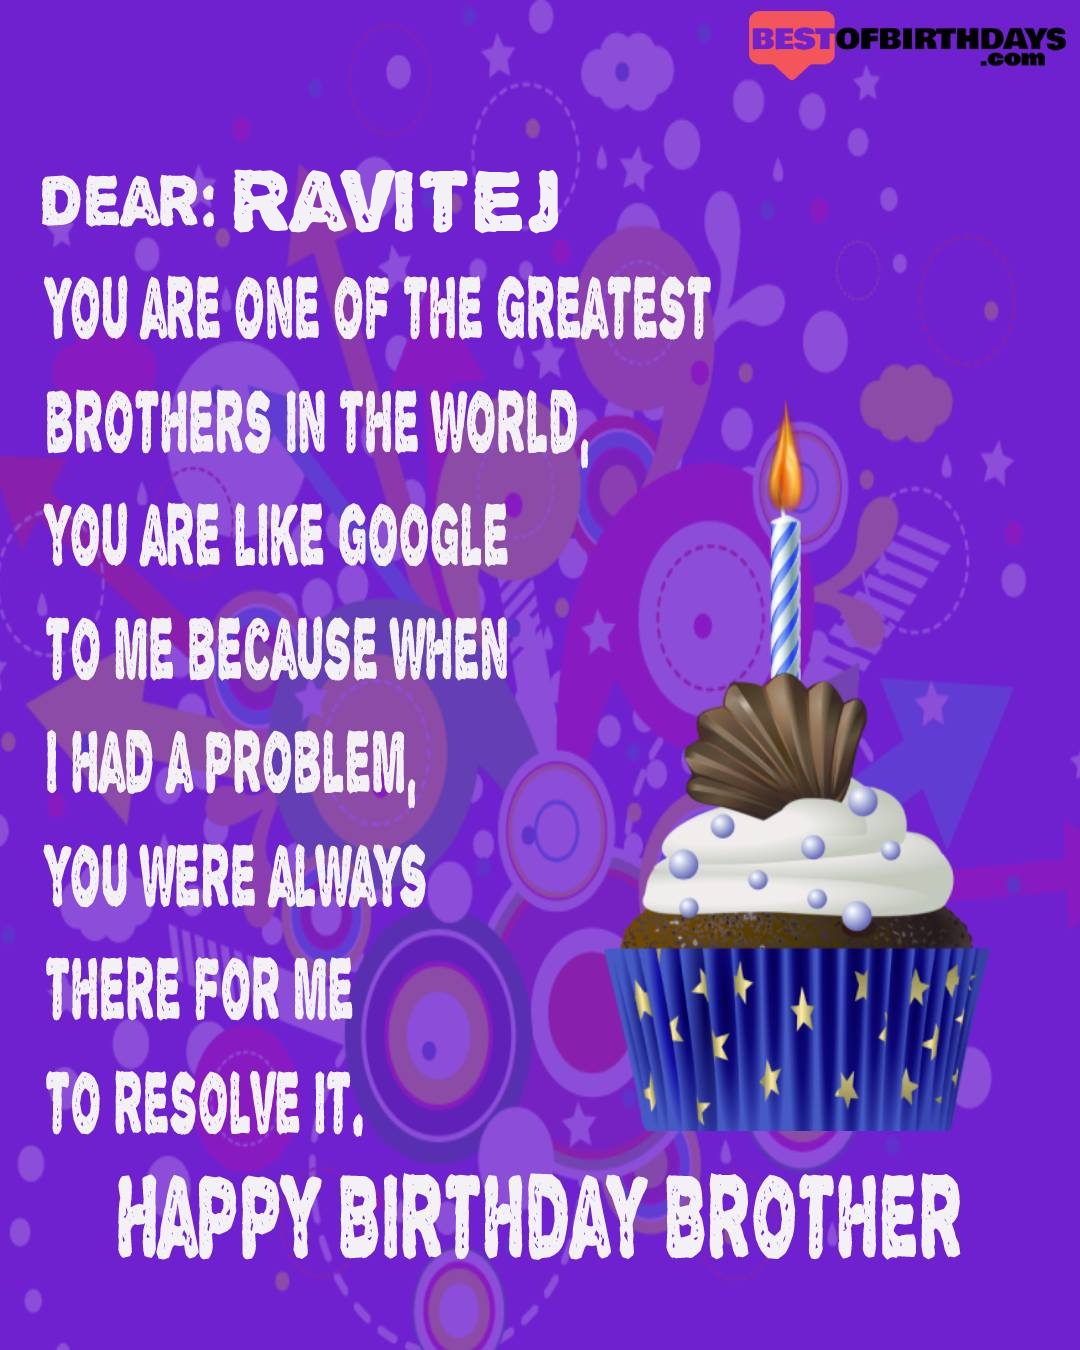 Happy birthday ravitej bhai brother bro